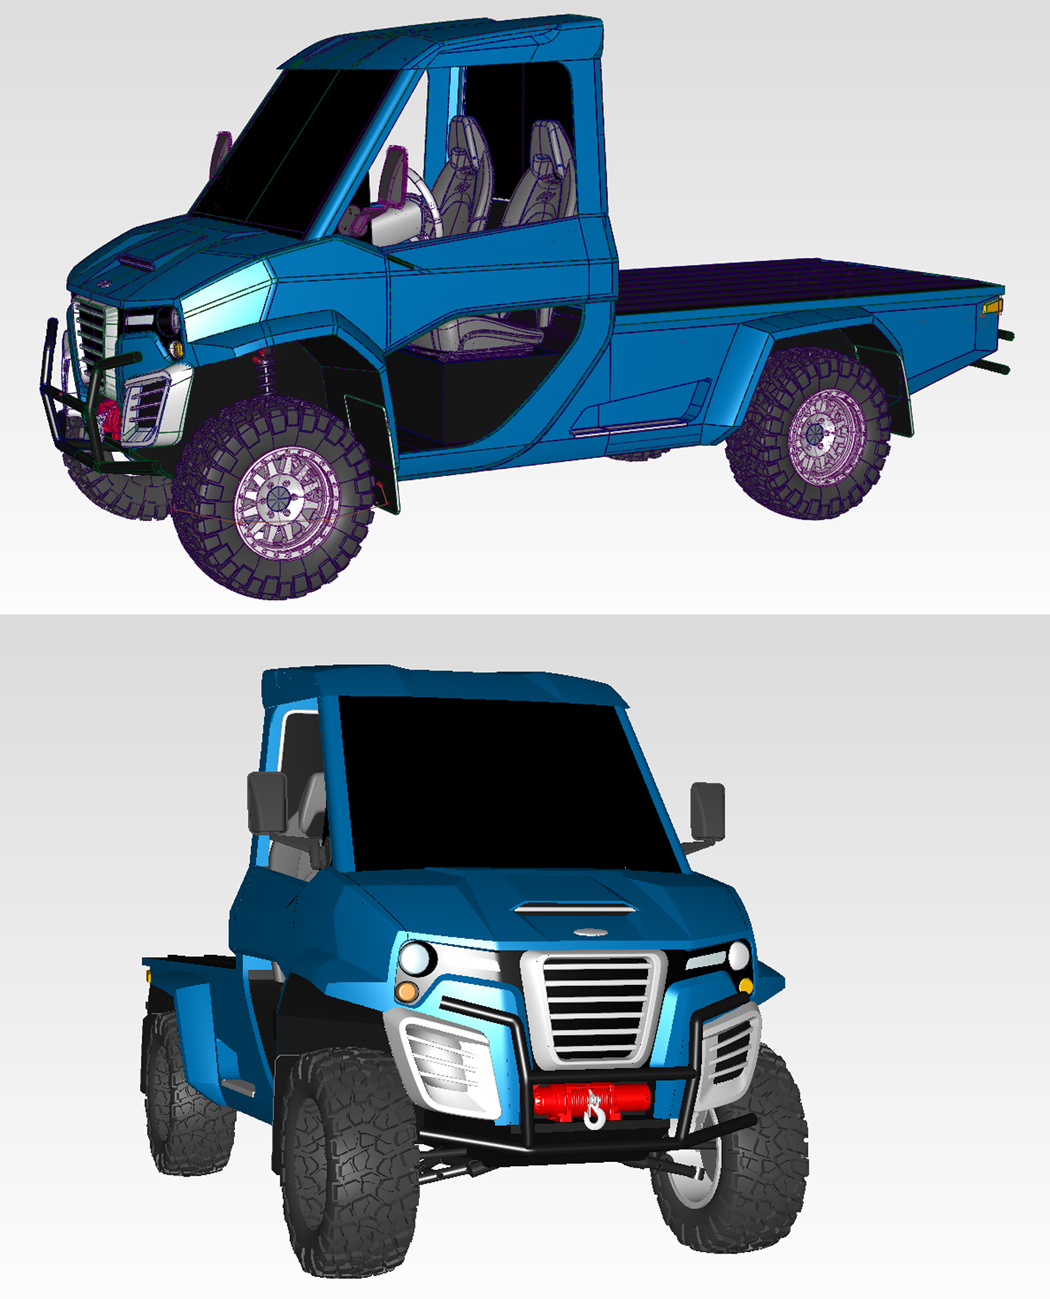 AYRO 511 UTV Keage Concepts Calgary Alberta Automotive Design